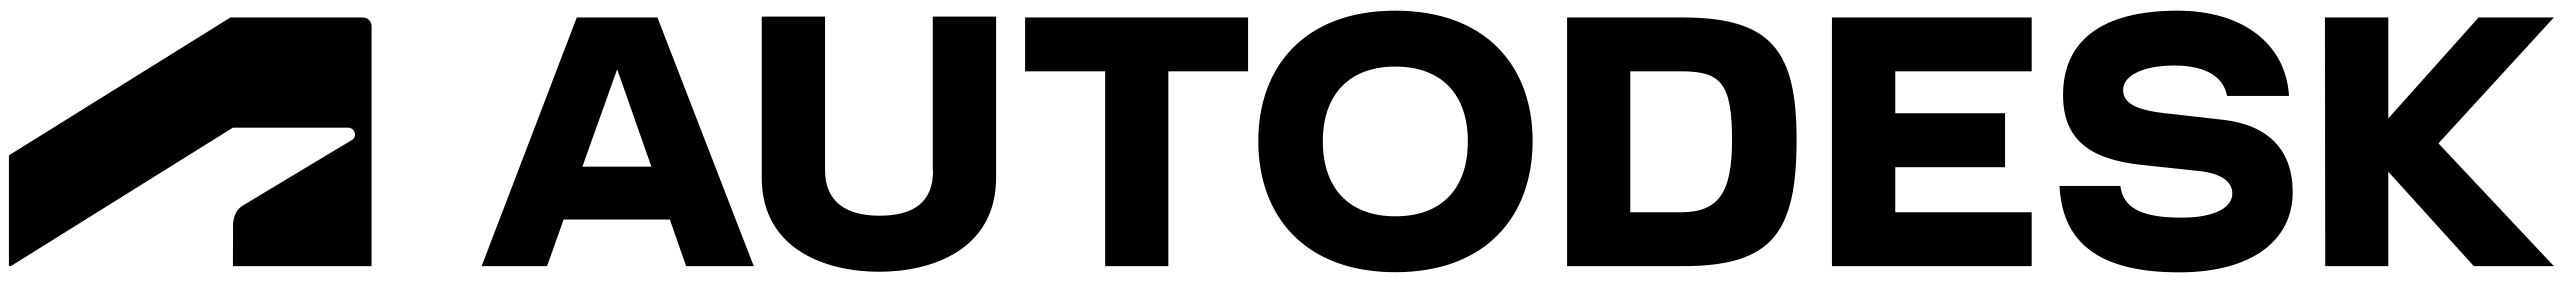 Autodesk_Logo_2021.svg (003)